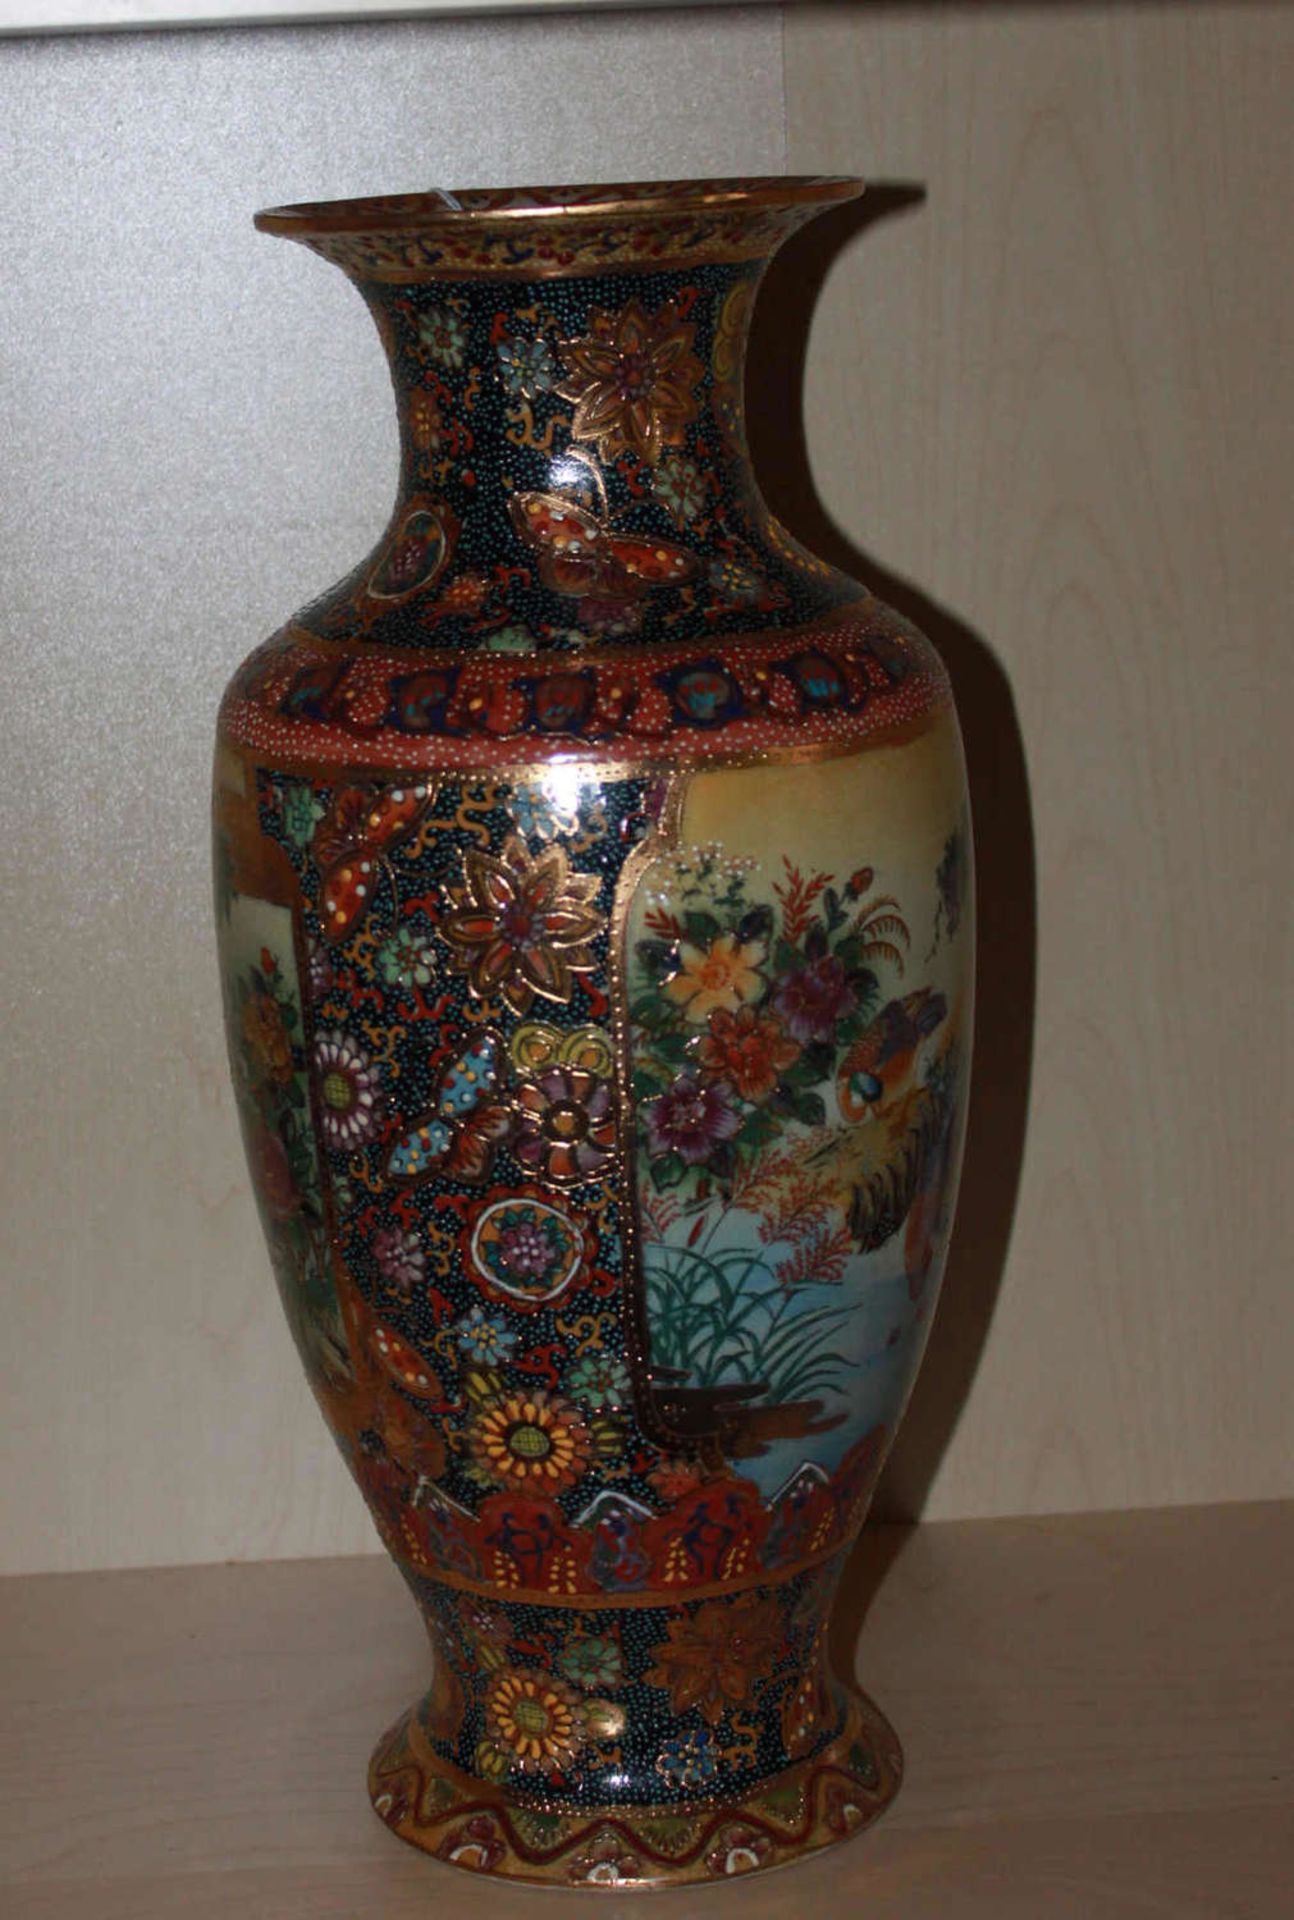 Jing an China Vase mit feinster Bemalung, viele Goldapplikationen. Am Stand rote Glasurmarke Jing